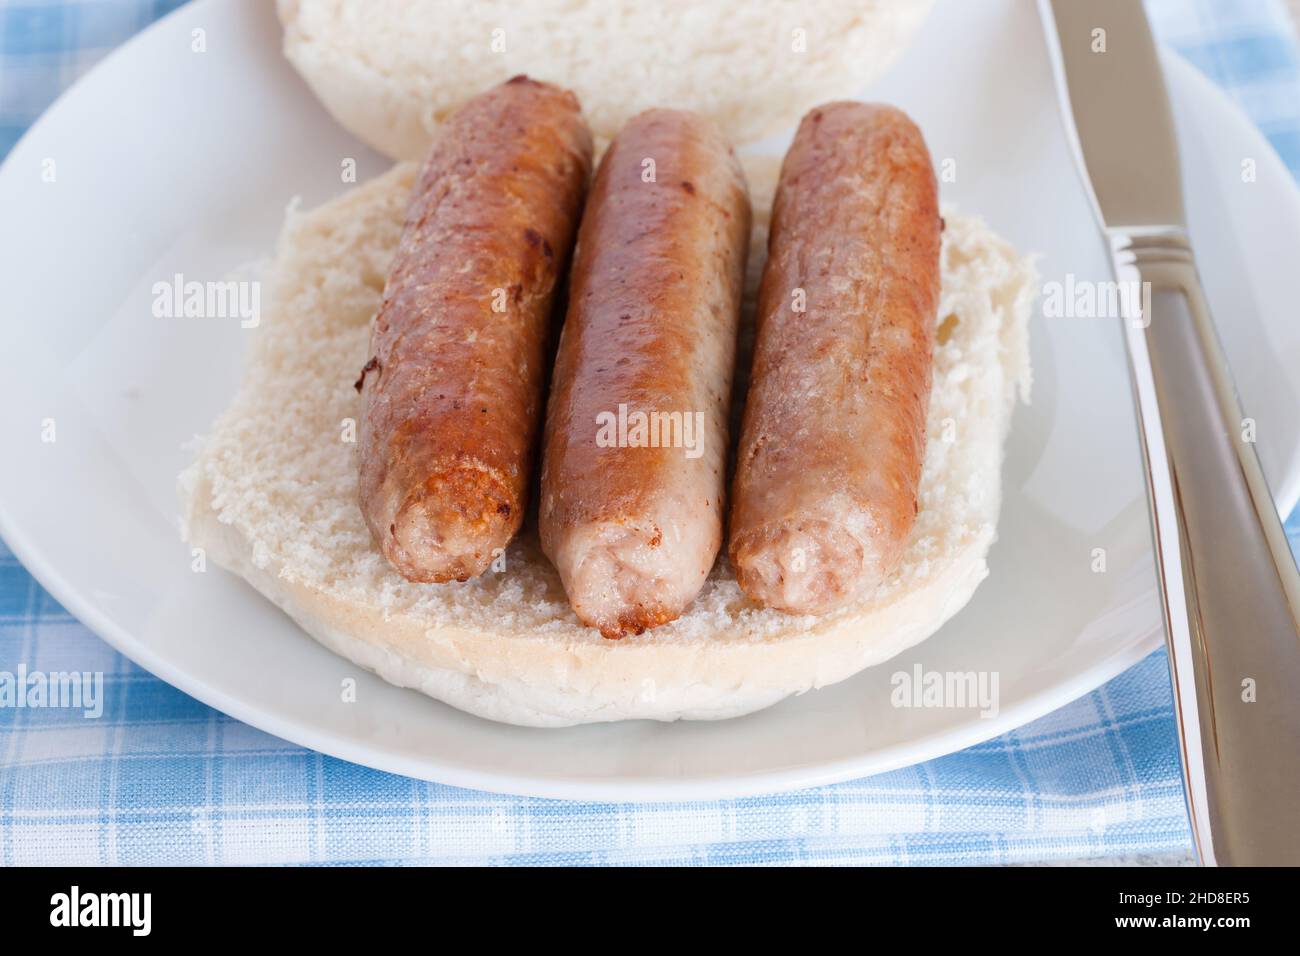 Sausage sandwich or sausage bap a popular British breakfast snack Stock Photo